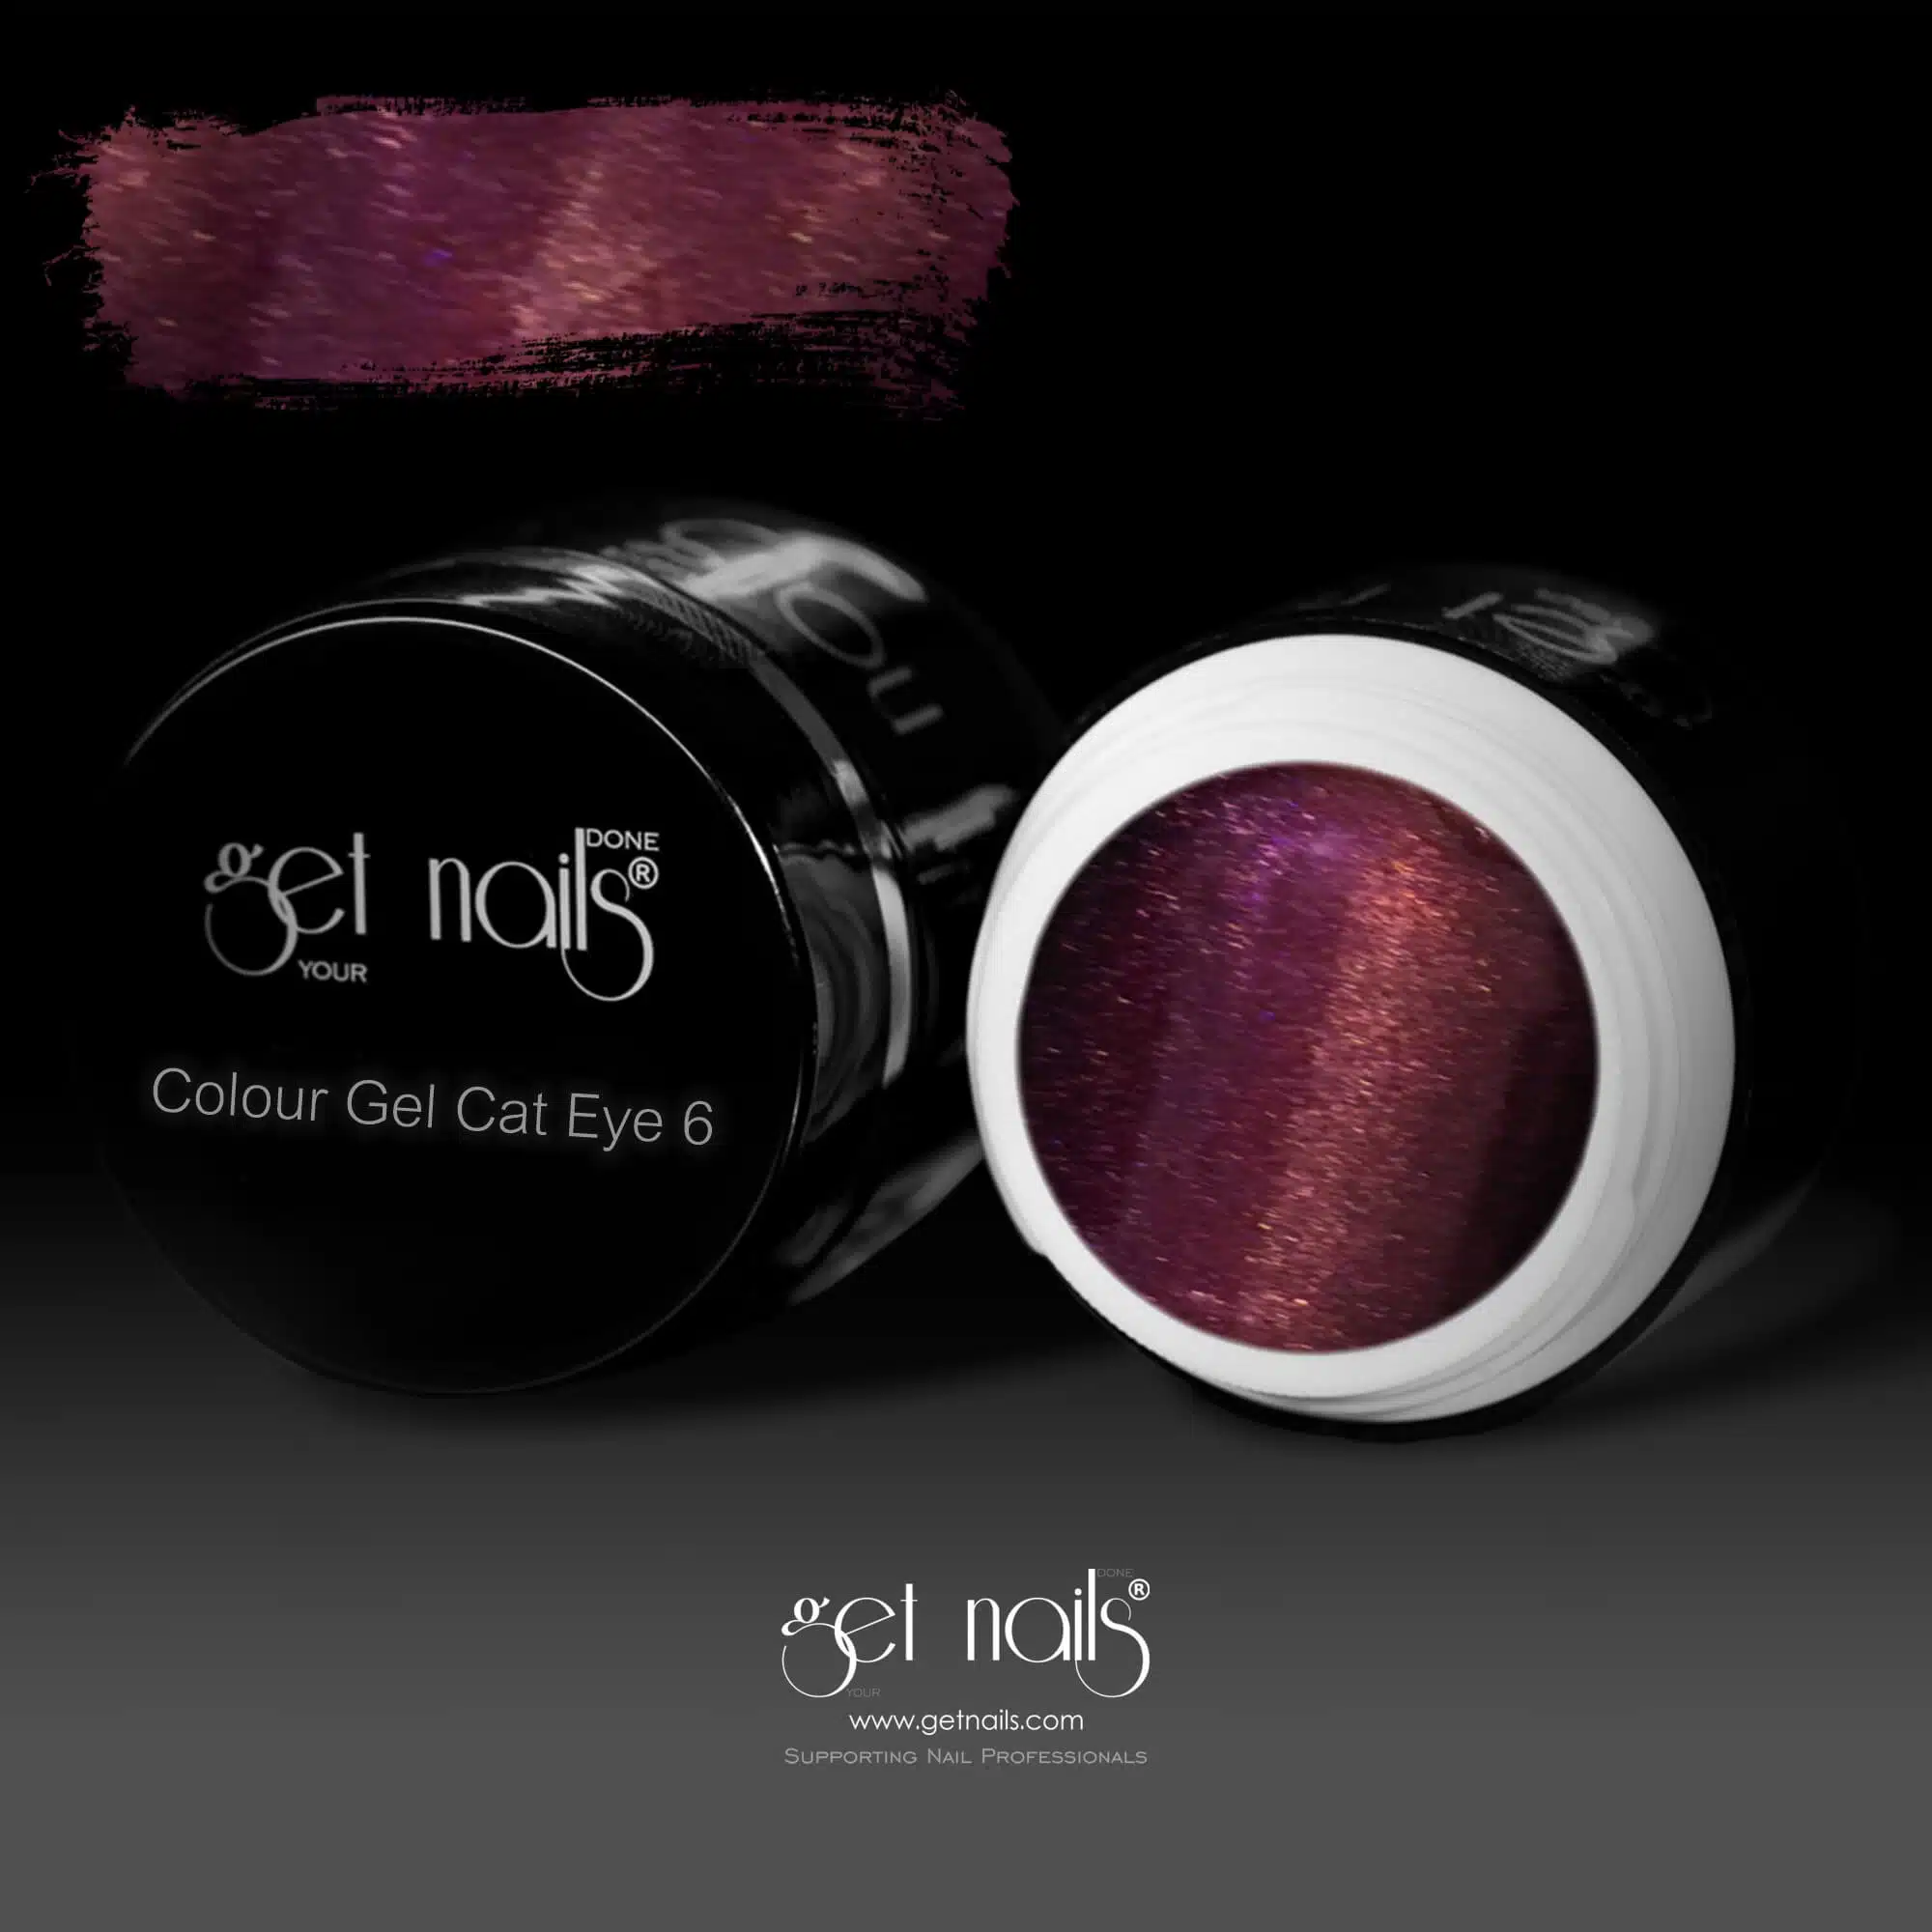 Get Nails Austria - Colour Gel Cat Eye 6